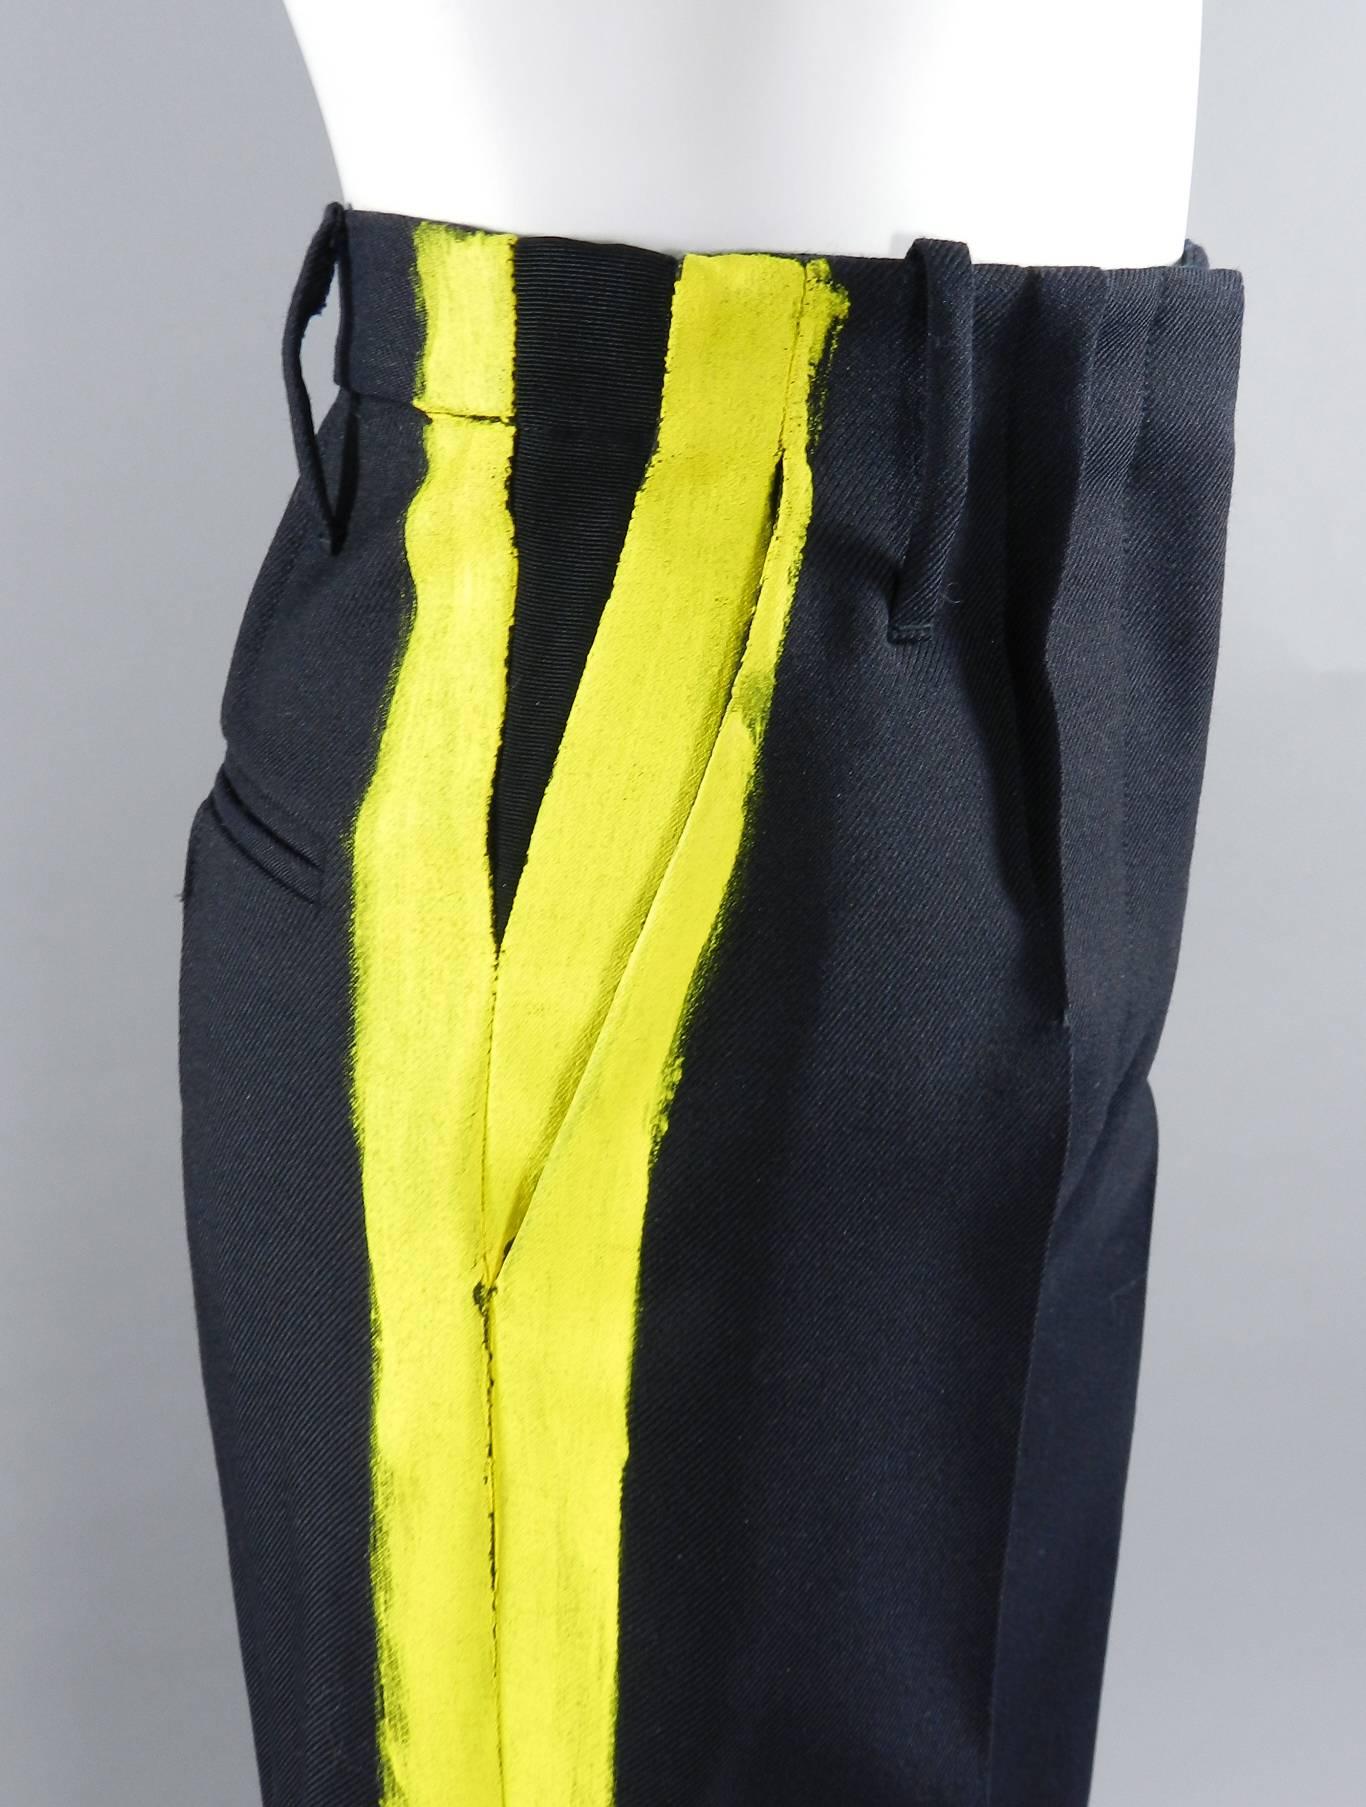 Maison Martin Margiela Fall 2013 Runway Black Pants w Yellow Painted Sides 2